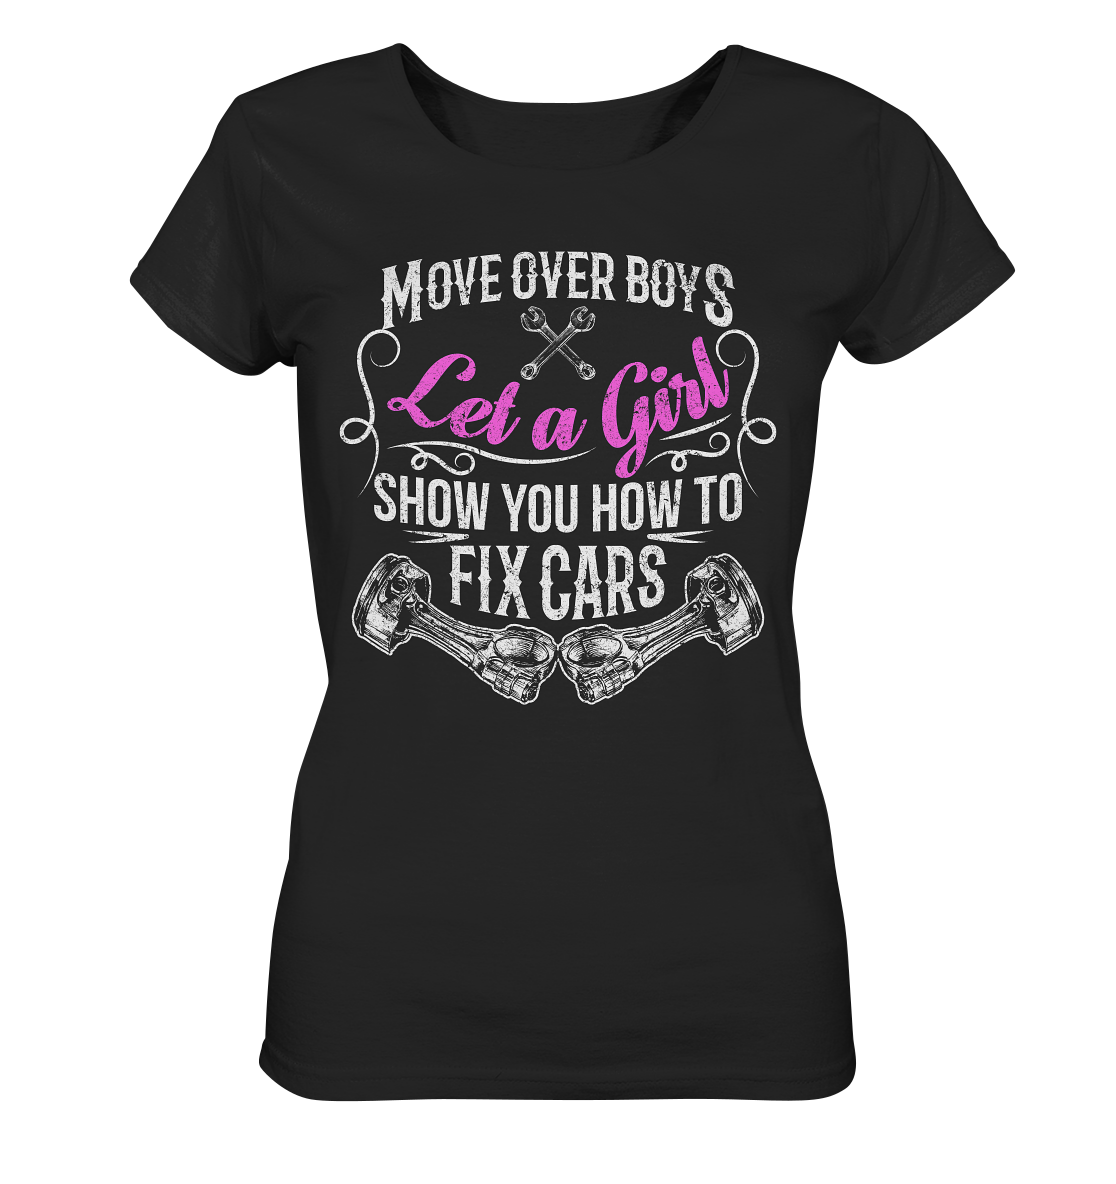 Cargirl_Moveover Ladies Organic Shirt